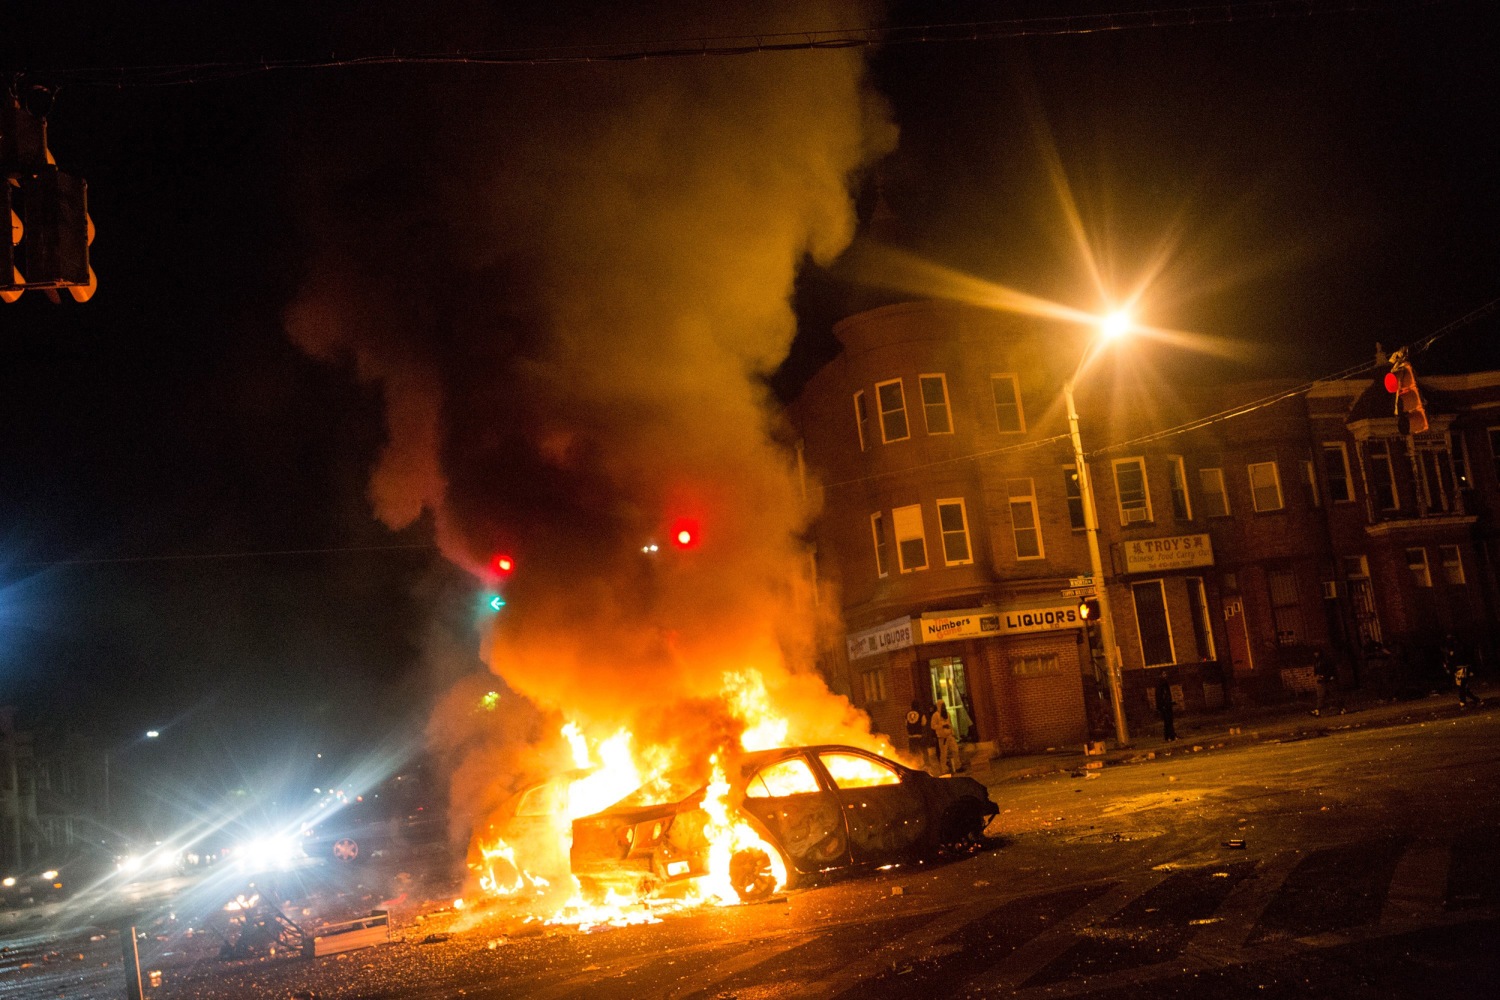 Baltimore Burns: Freddie Gray Protests Turn Violent, Prompting State of Emergency